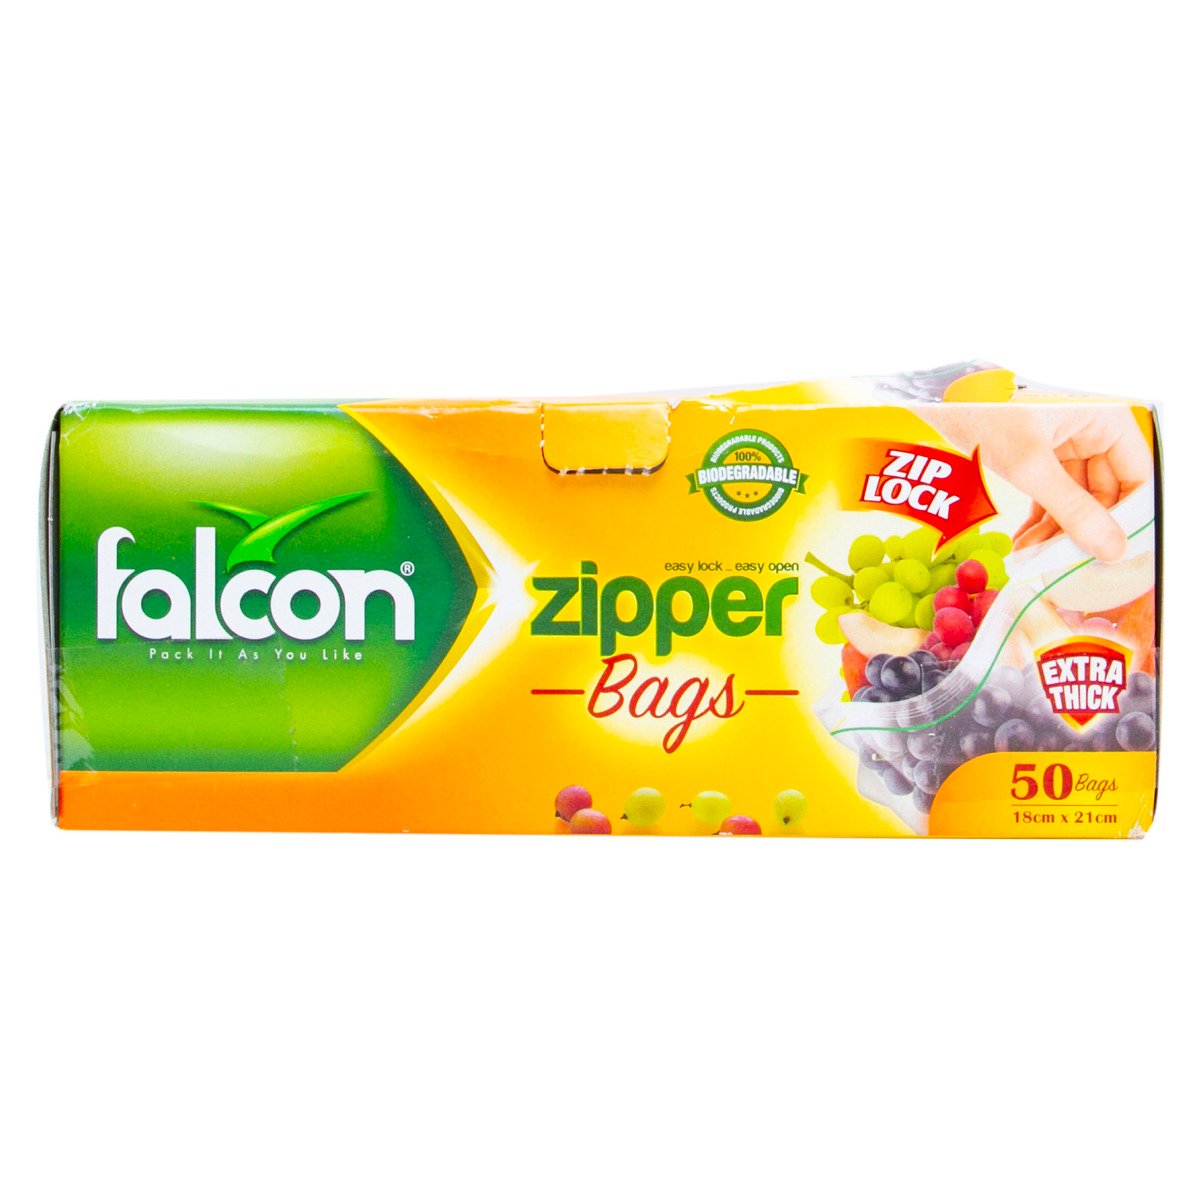 Buy Falcon Zipper Bags Size 18cm x 21cm 50pcs Online at Best Price | Food Bags | Lulu UAE in UAE